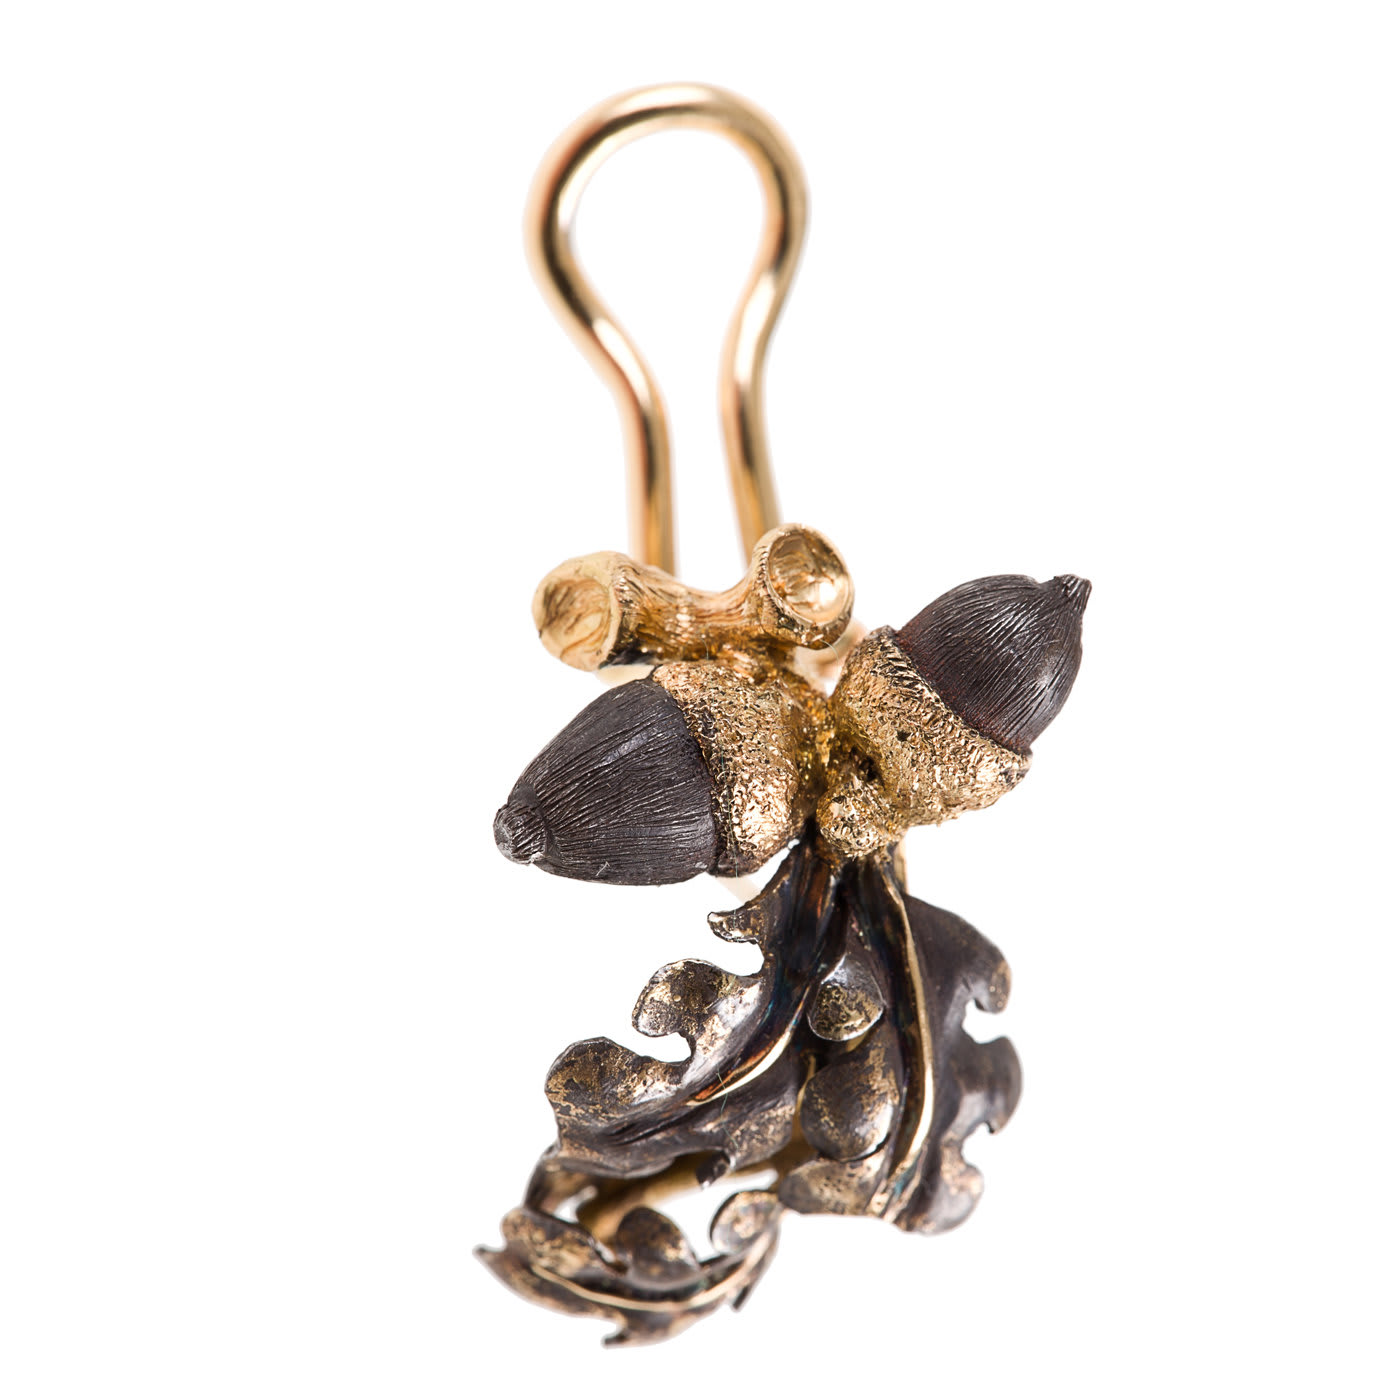 Natura Gold and Iron Earrings - Marco Baroni